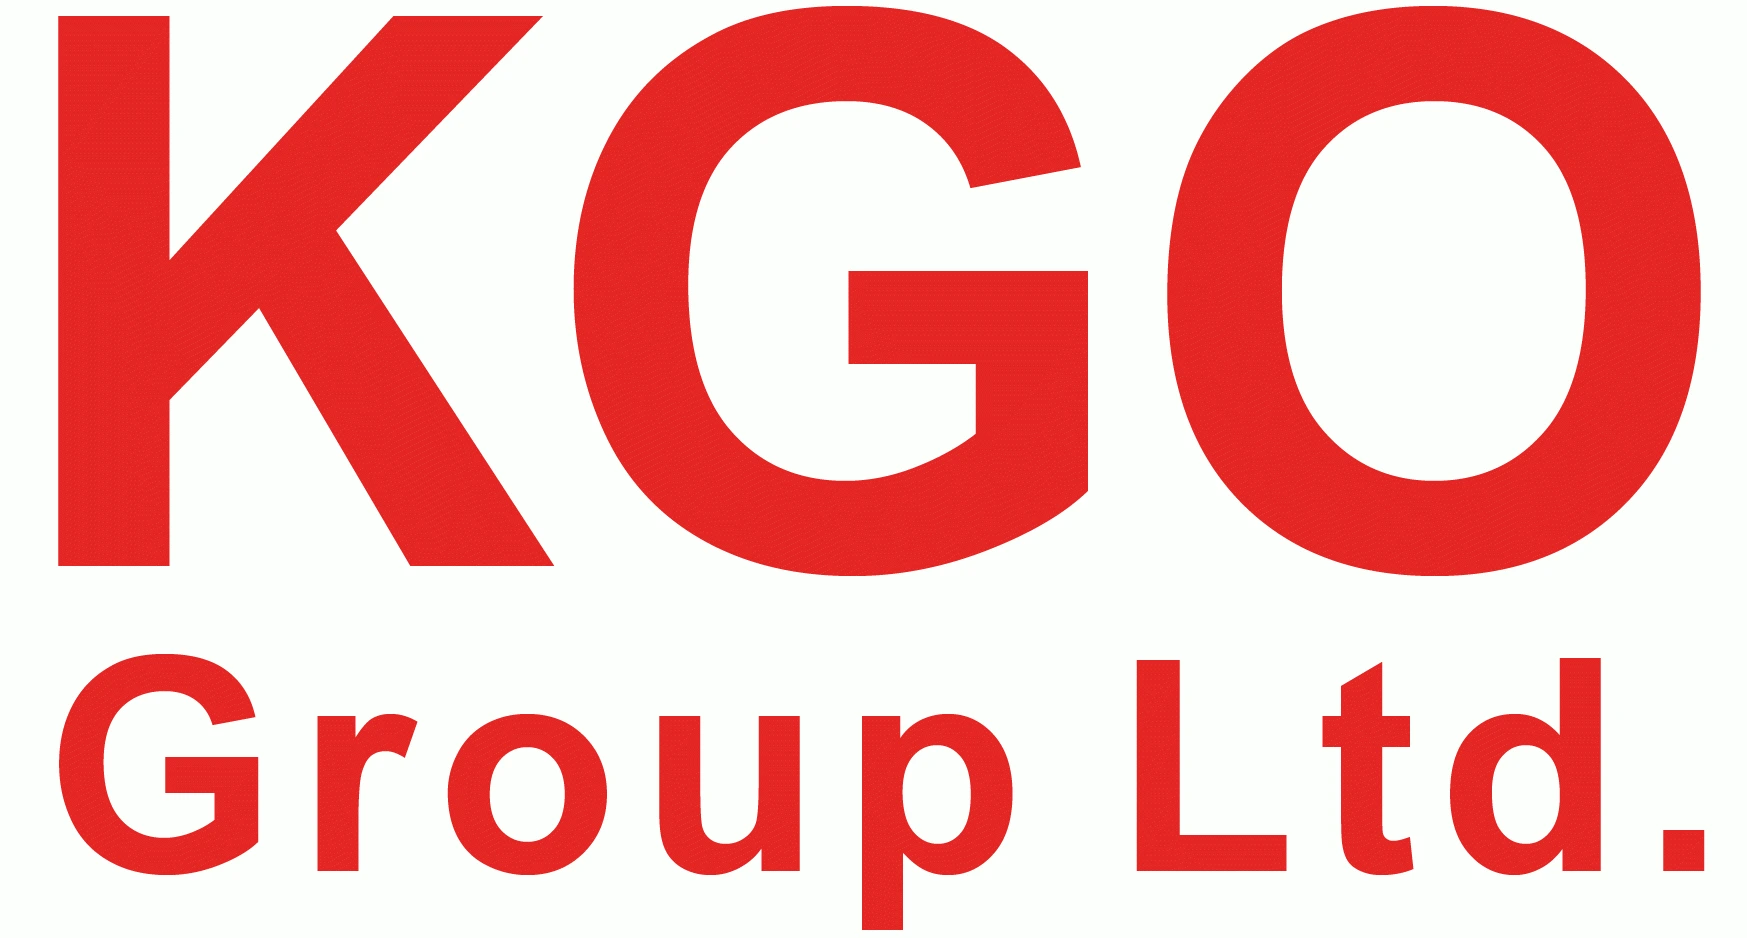 KGO Group Ltd.